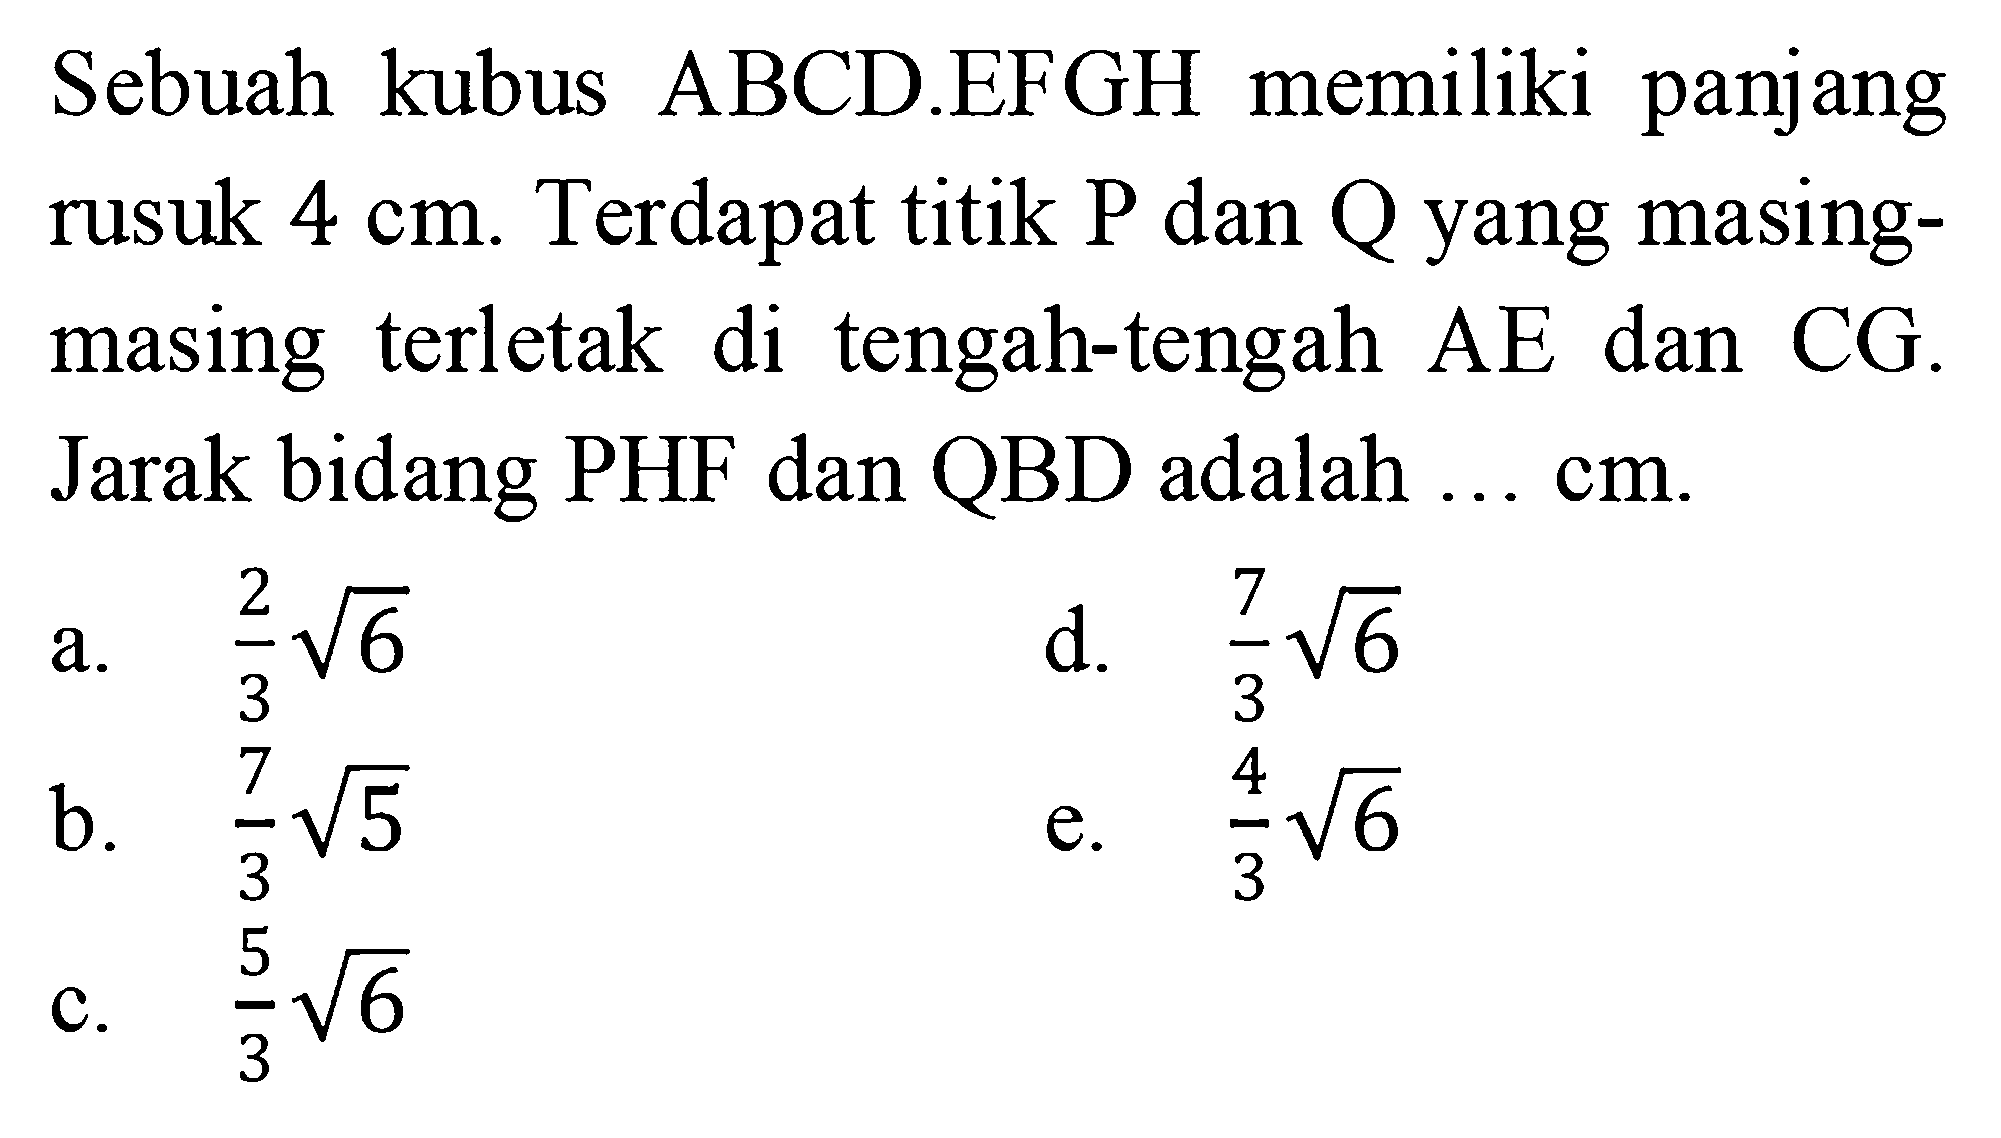 Sebuah kubus ABCDEFGH memiliki panjang rusuk 4 cm. Terdapat titik P dan Q yang masing-masing terletak di tengah-tengah AE dan CG. Jarak bidang PHF dan QBD adalah ... cm